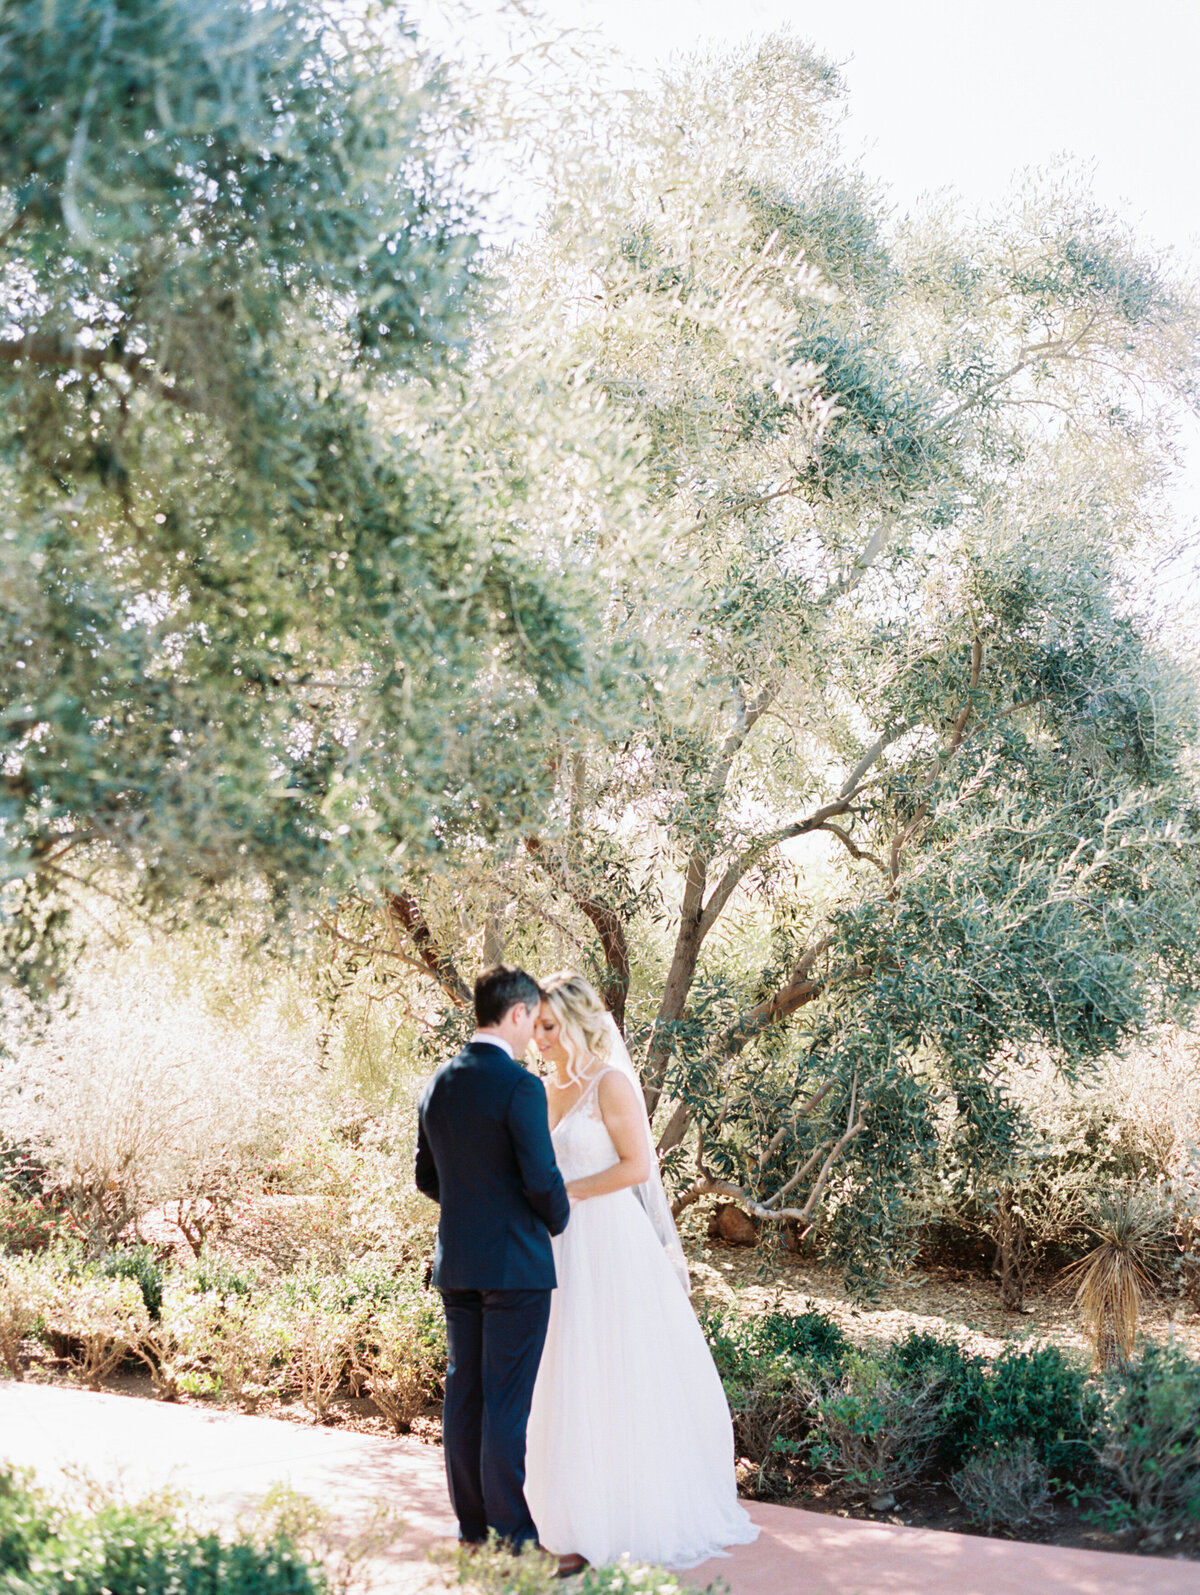 Rachael & Cameron Testimonial | Mary Claire Photography | Arizona & Destination Fine Art Wedding Photographer